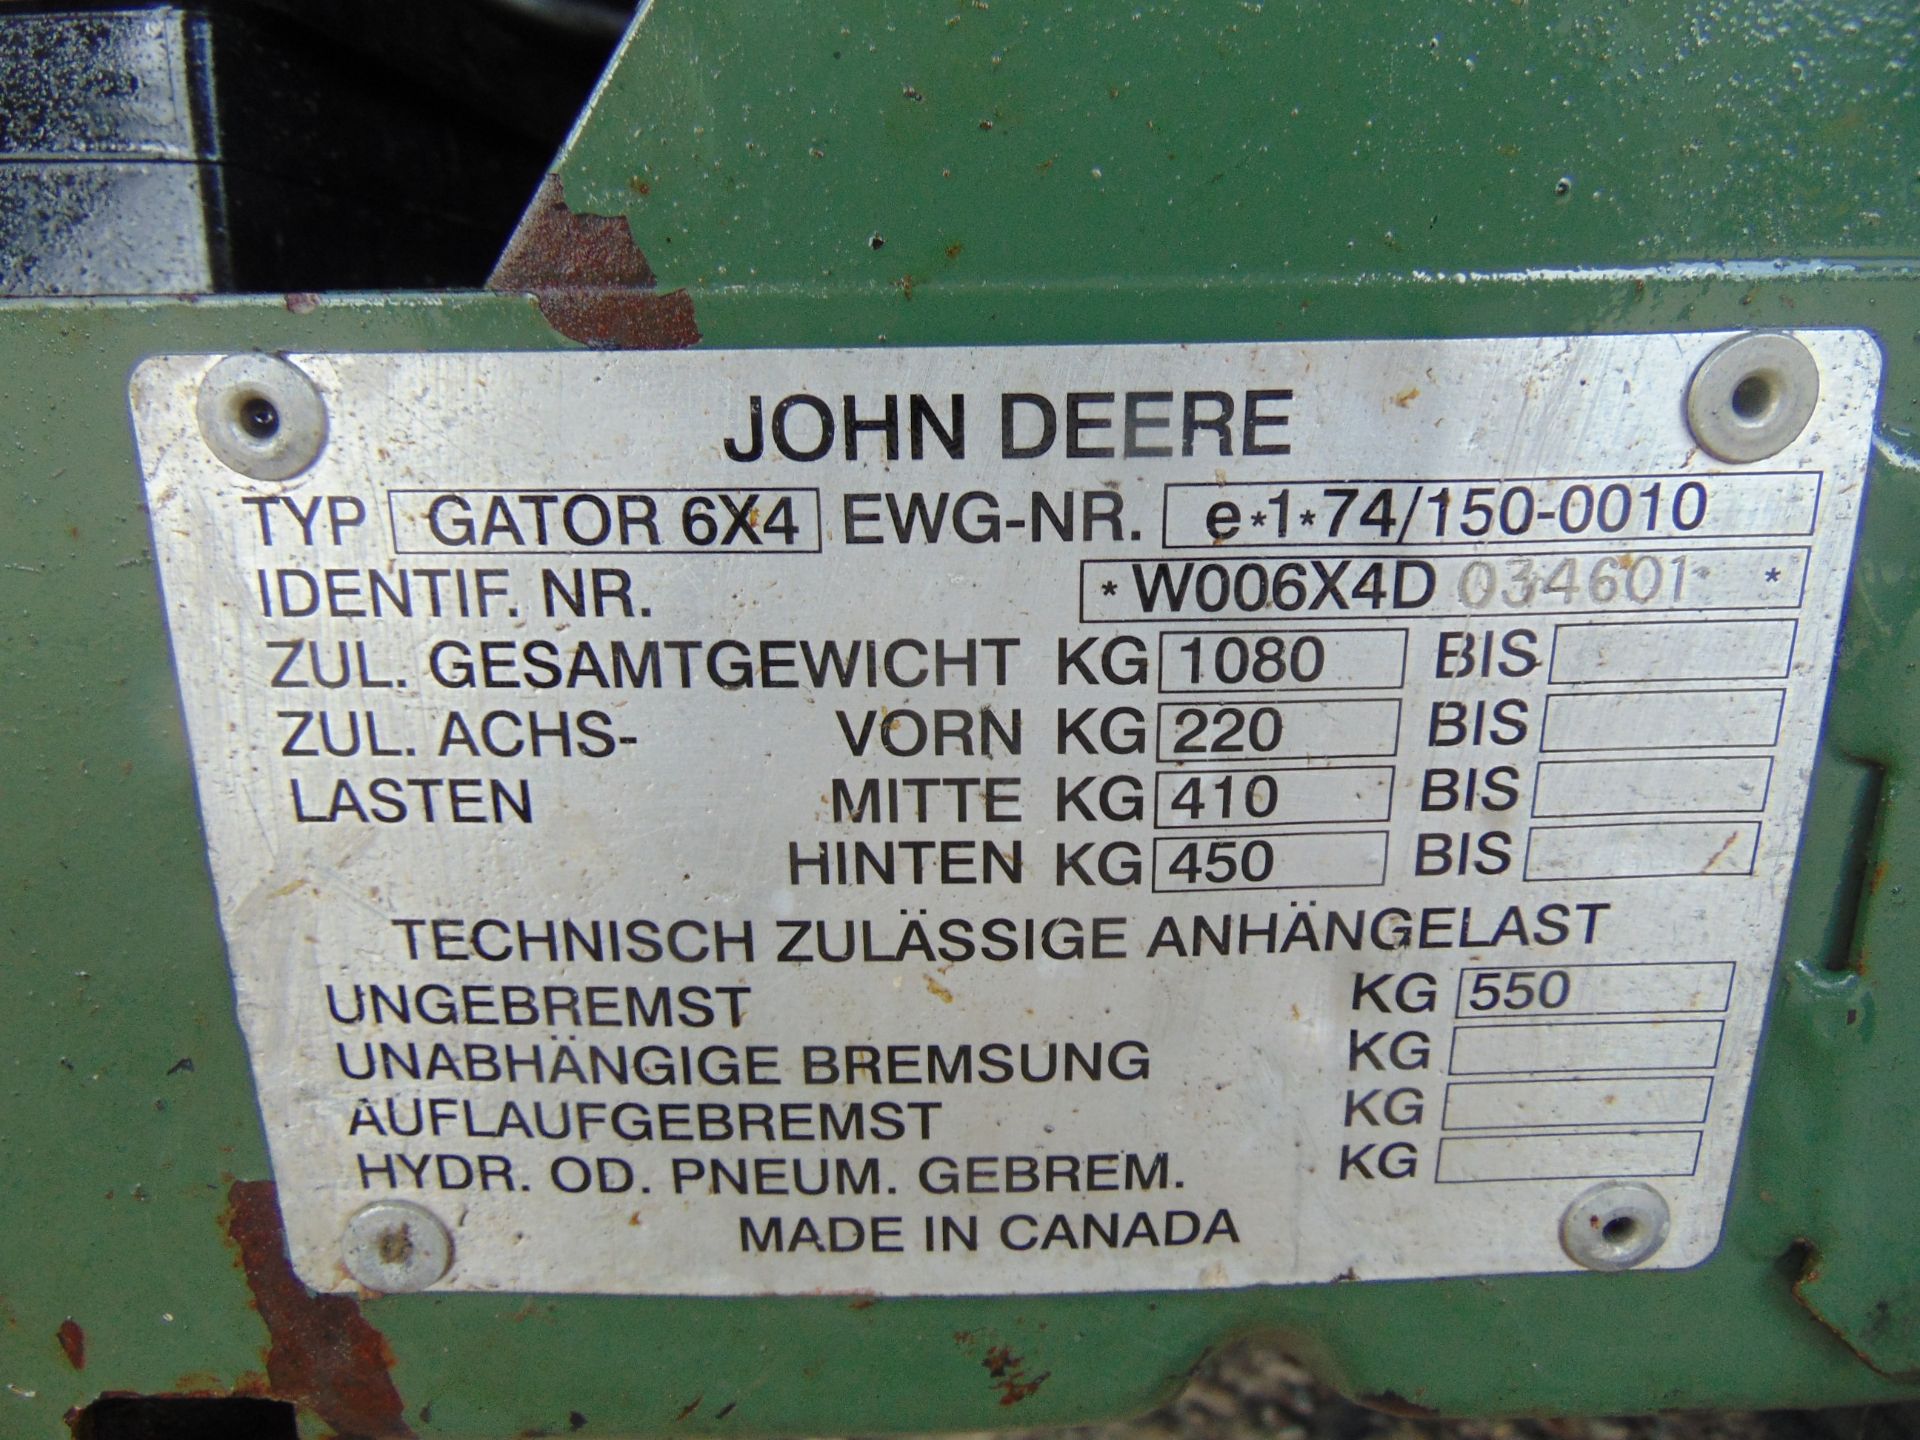 John Deere Trail Gator 6x4 Utility ATV C/W Tipping Rear Body - Image 24 of 24